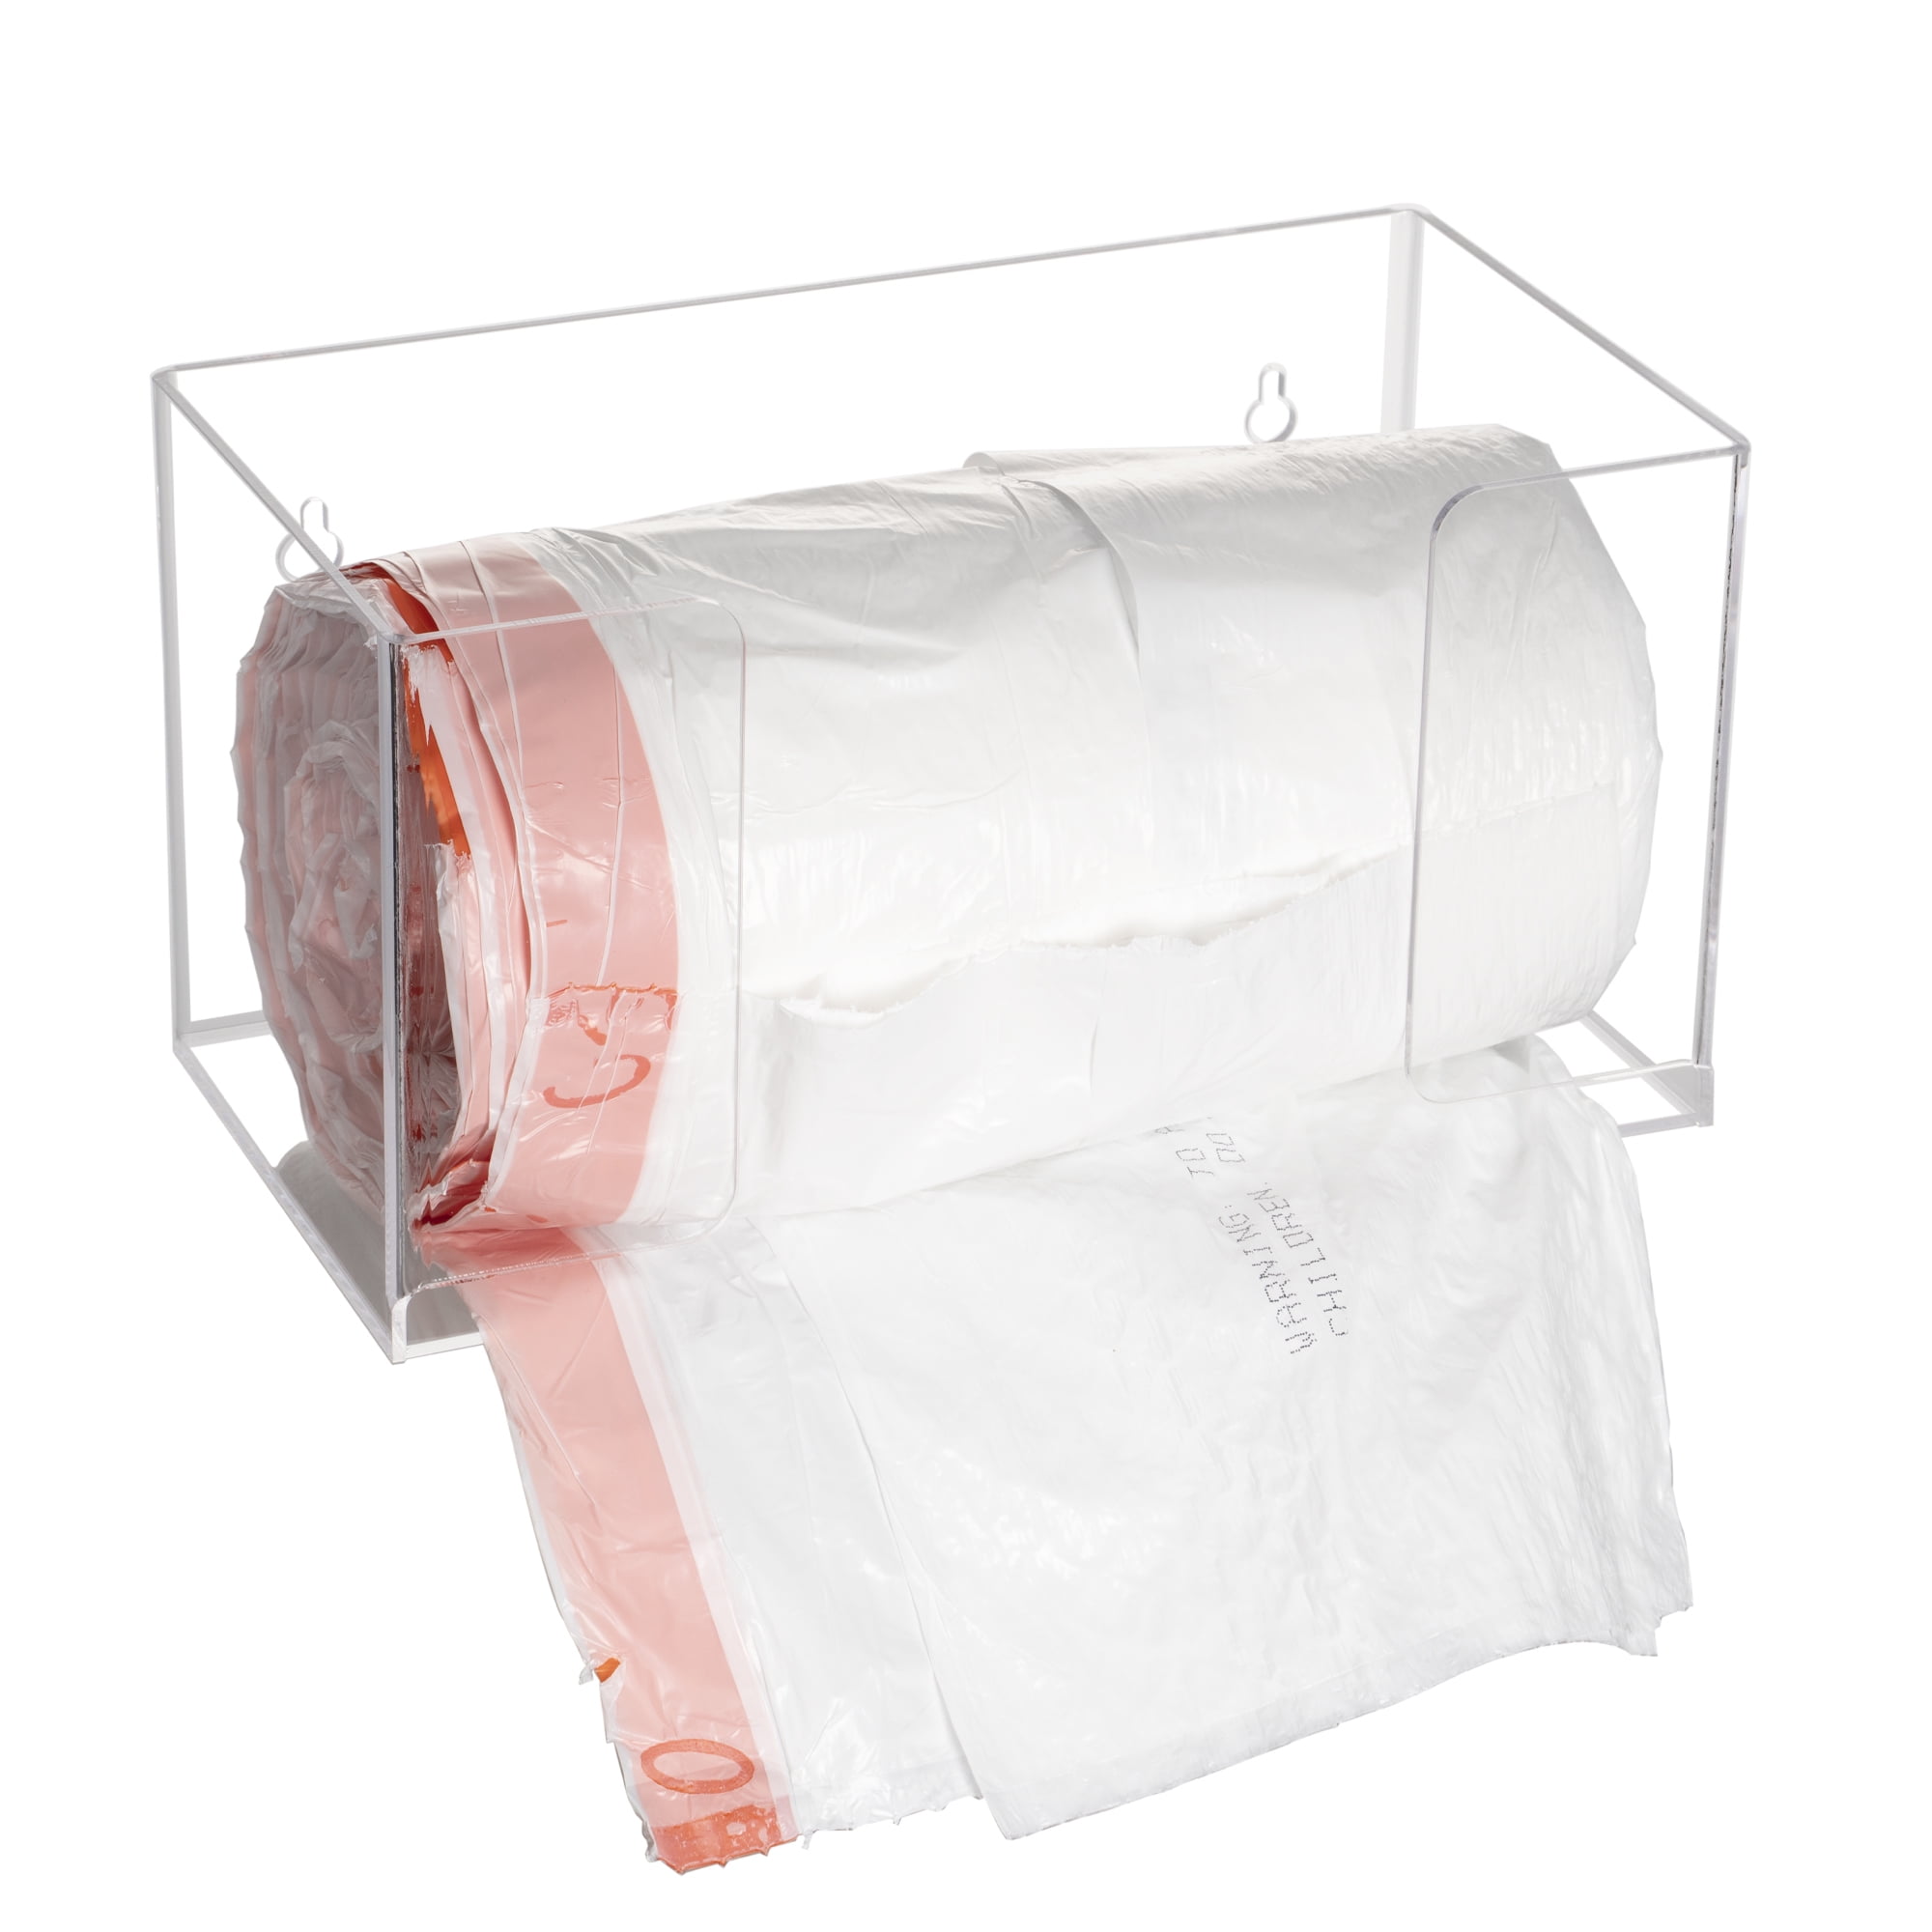 SEANADO Grocery Bag Holder & Trash Bag Roll Dispenser Clear, 2 in